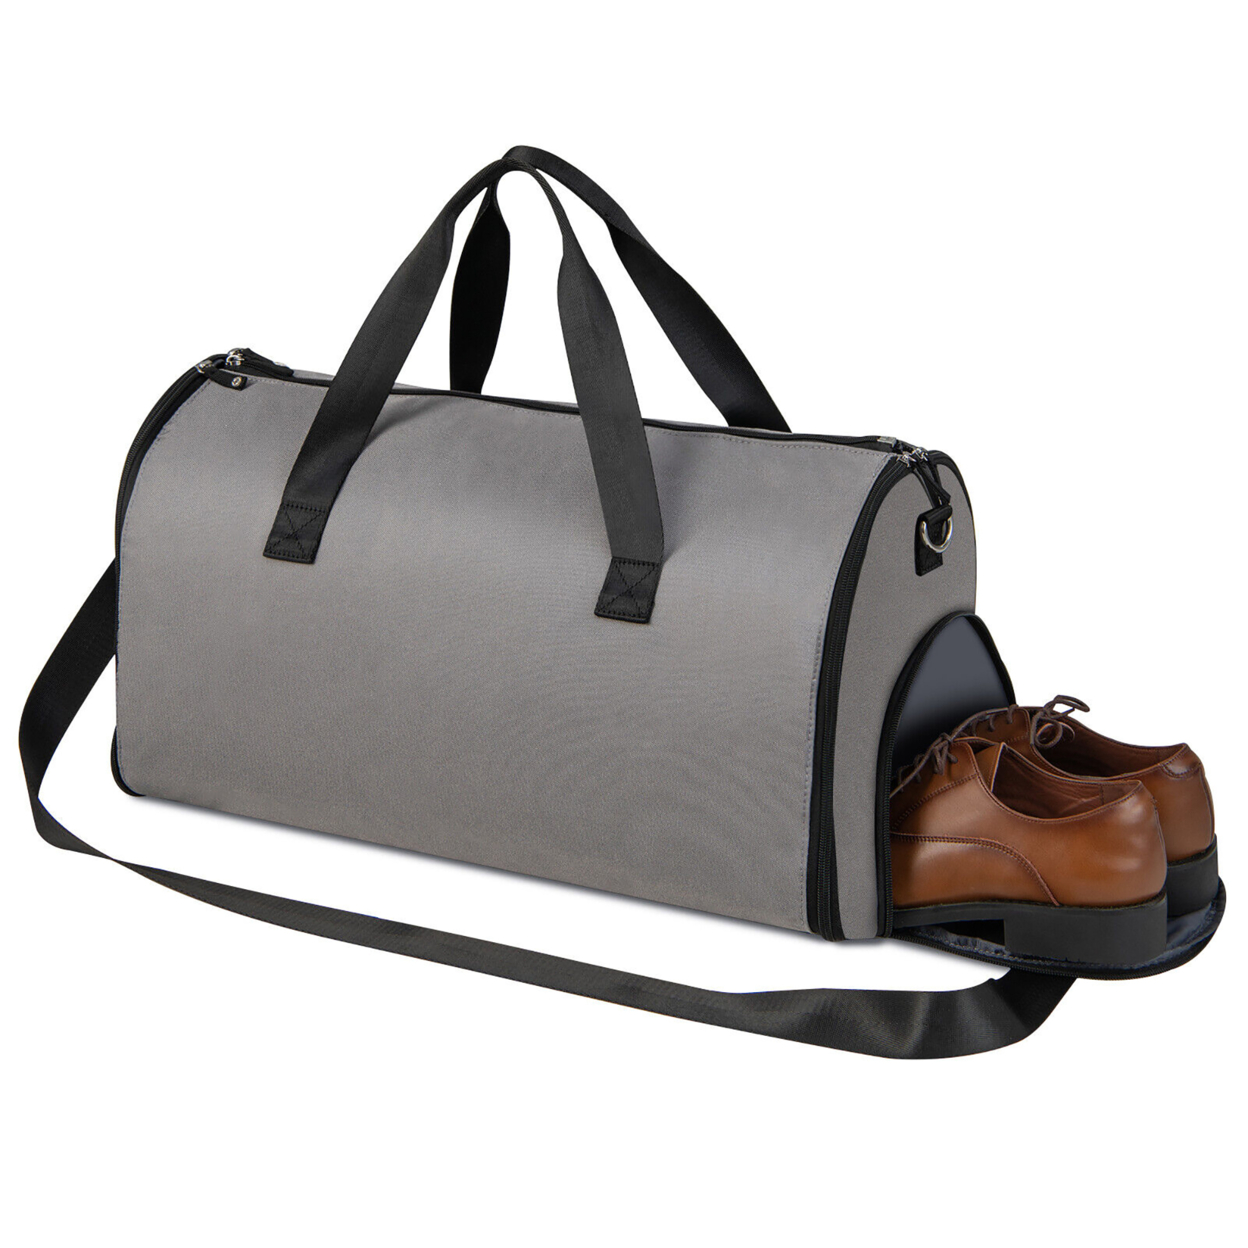 2 In 1 Duffel Garment Bag Hanging Suit Travel Bag W/ Shoe Compartment & Strap Light - Light Grey